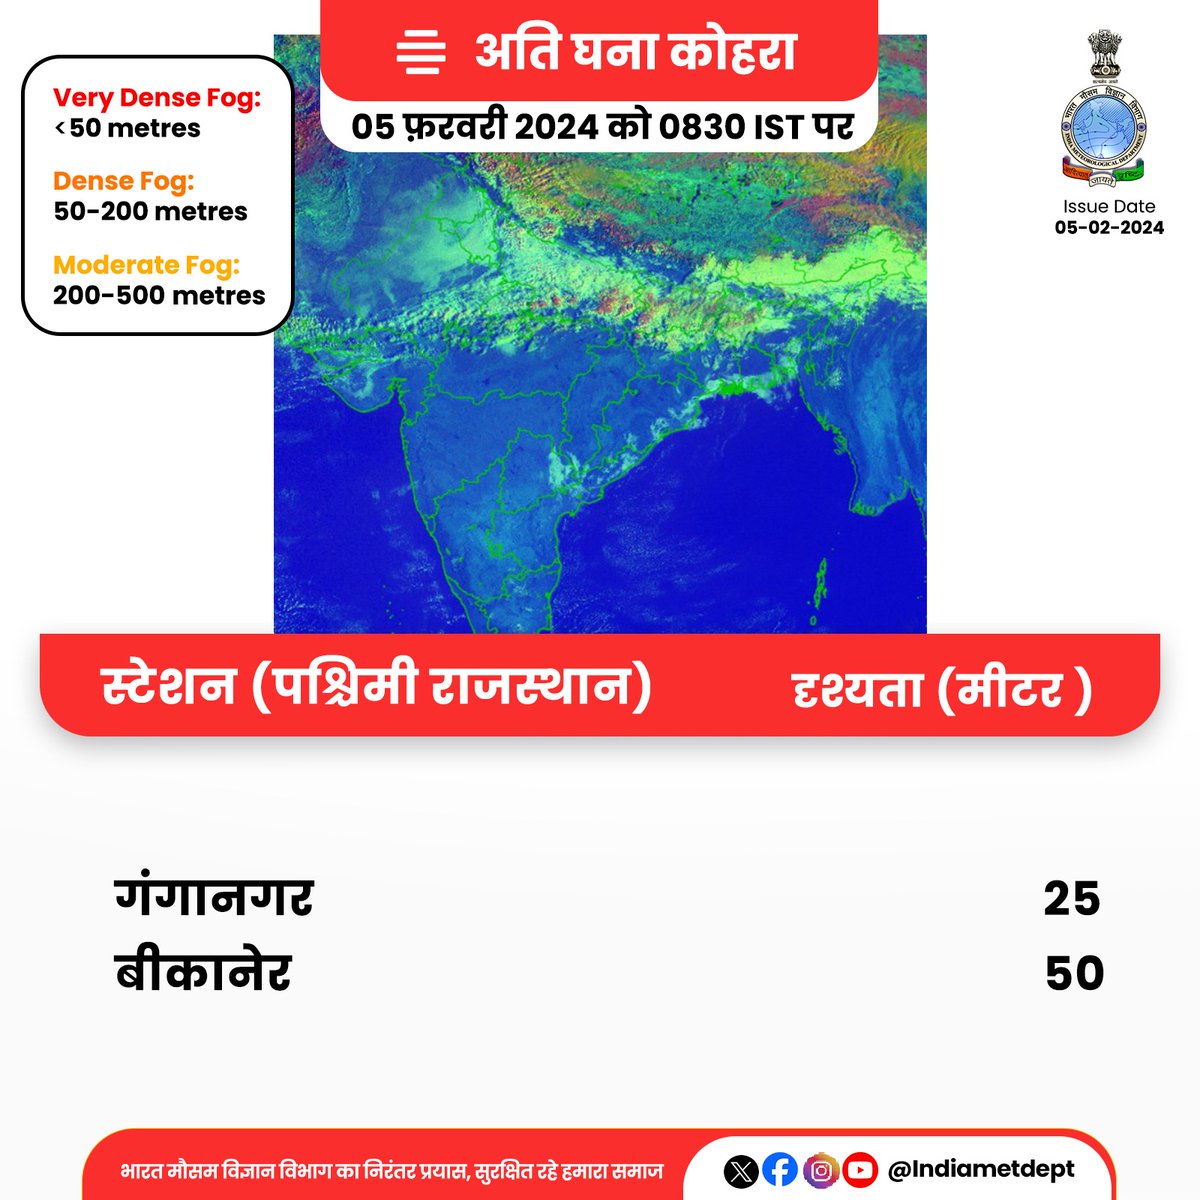 पश्चिम राजस्थान में अति घना कोहरा दर्ज किया गया है।  

#RajasthanWeather #Densefog #FogAlert

@AAI_Official @DGCAIndia @Jaipur_Airport
@RailMinIndia @NHAI_Official @moesgoi
@DDNewslive @ndmaindia @airnewsalerts
@IMDJaipur @RajCMO @BhajanlalBjp